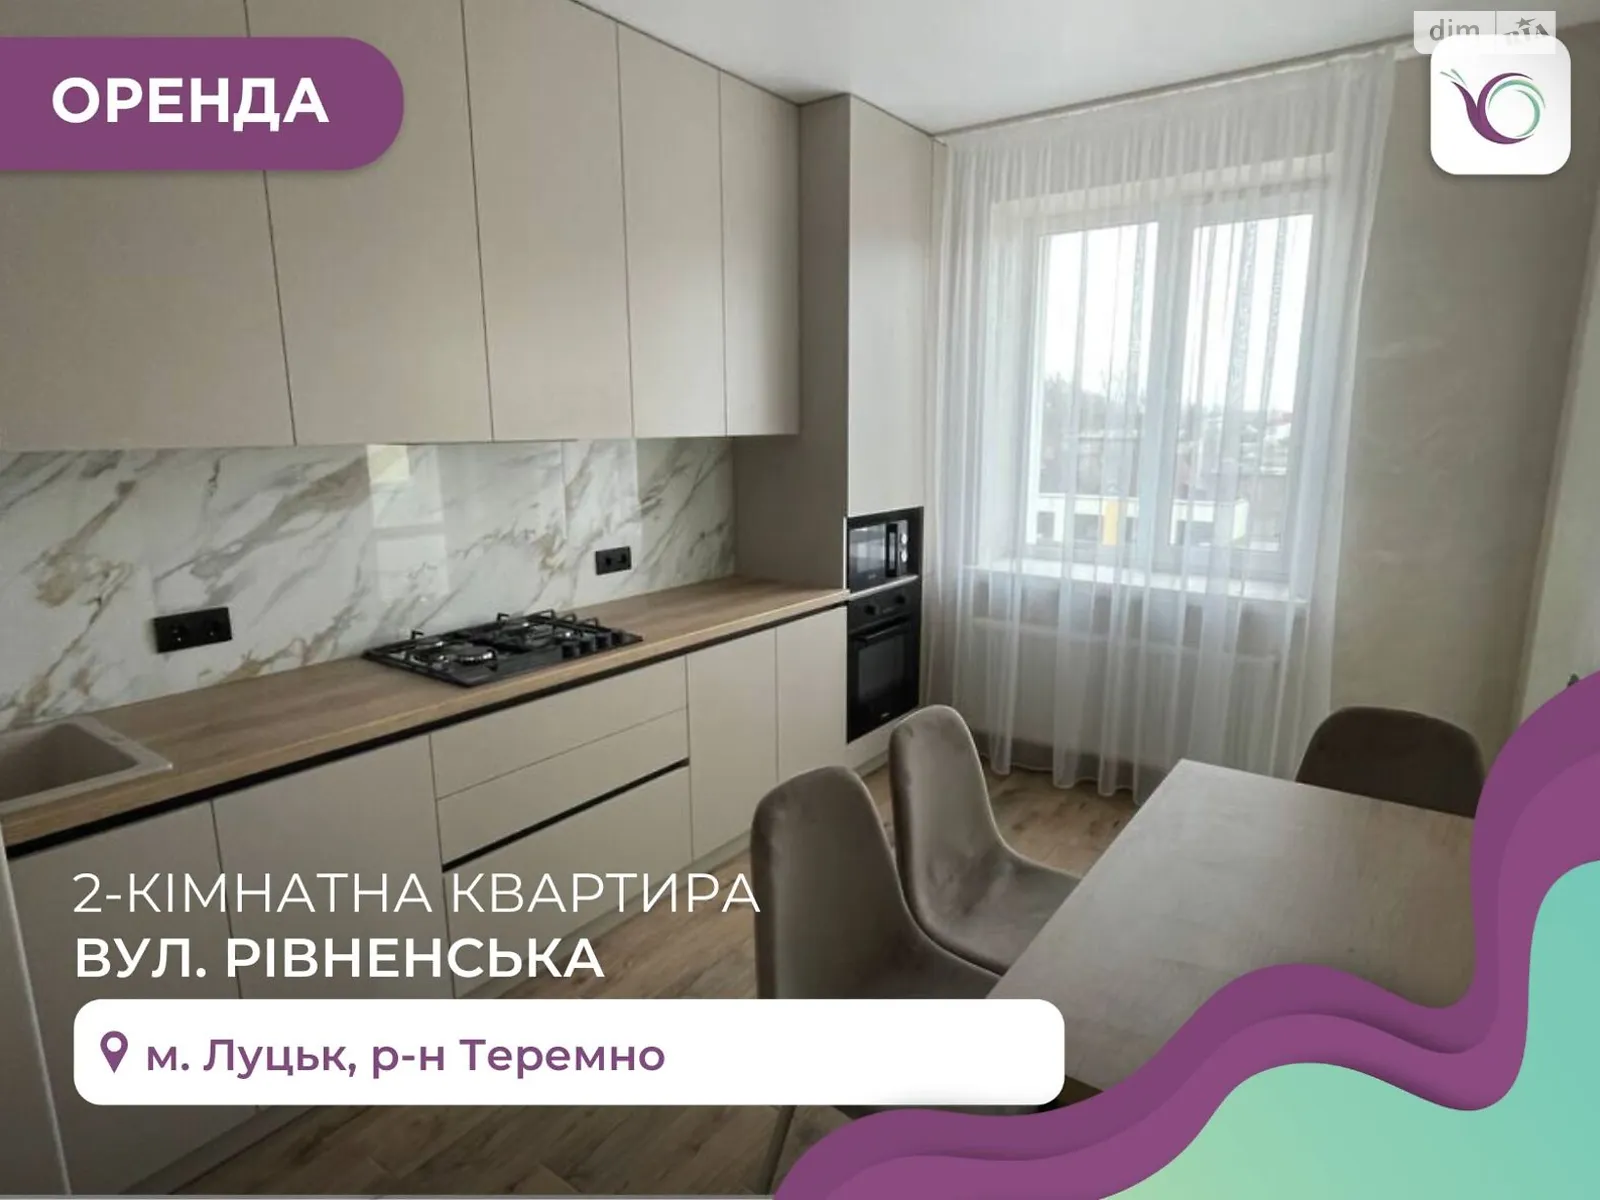 2-кімнатна квартира 60 кв. м у Луцьку, цена: 16000 грн